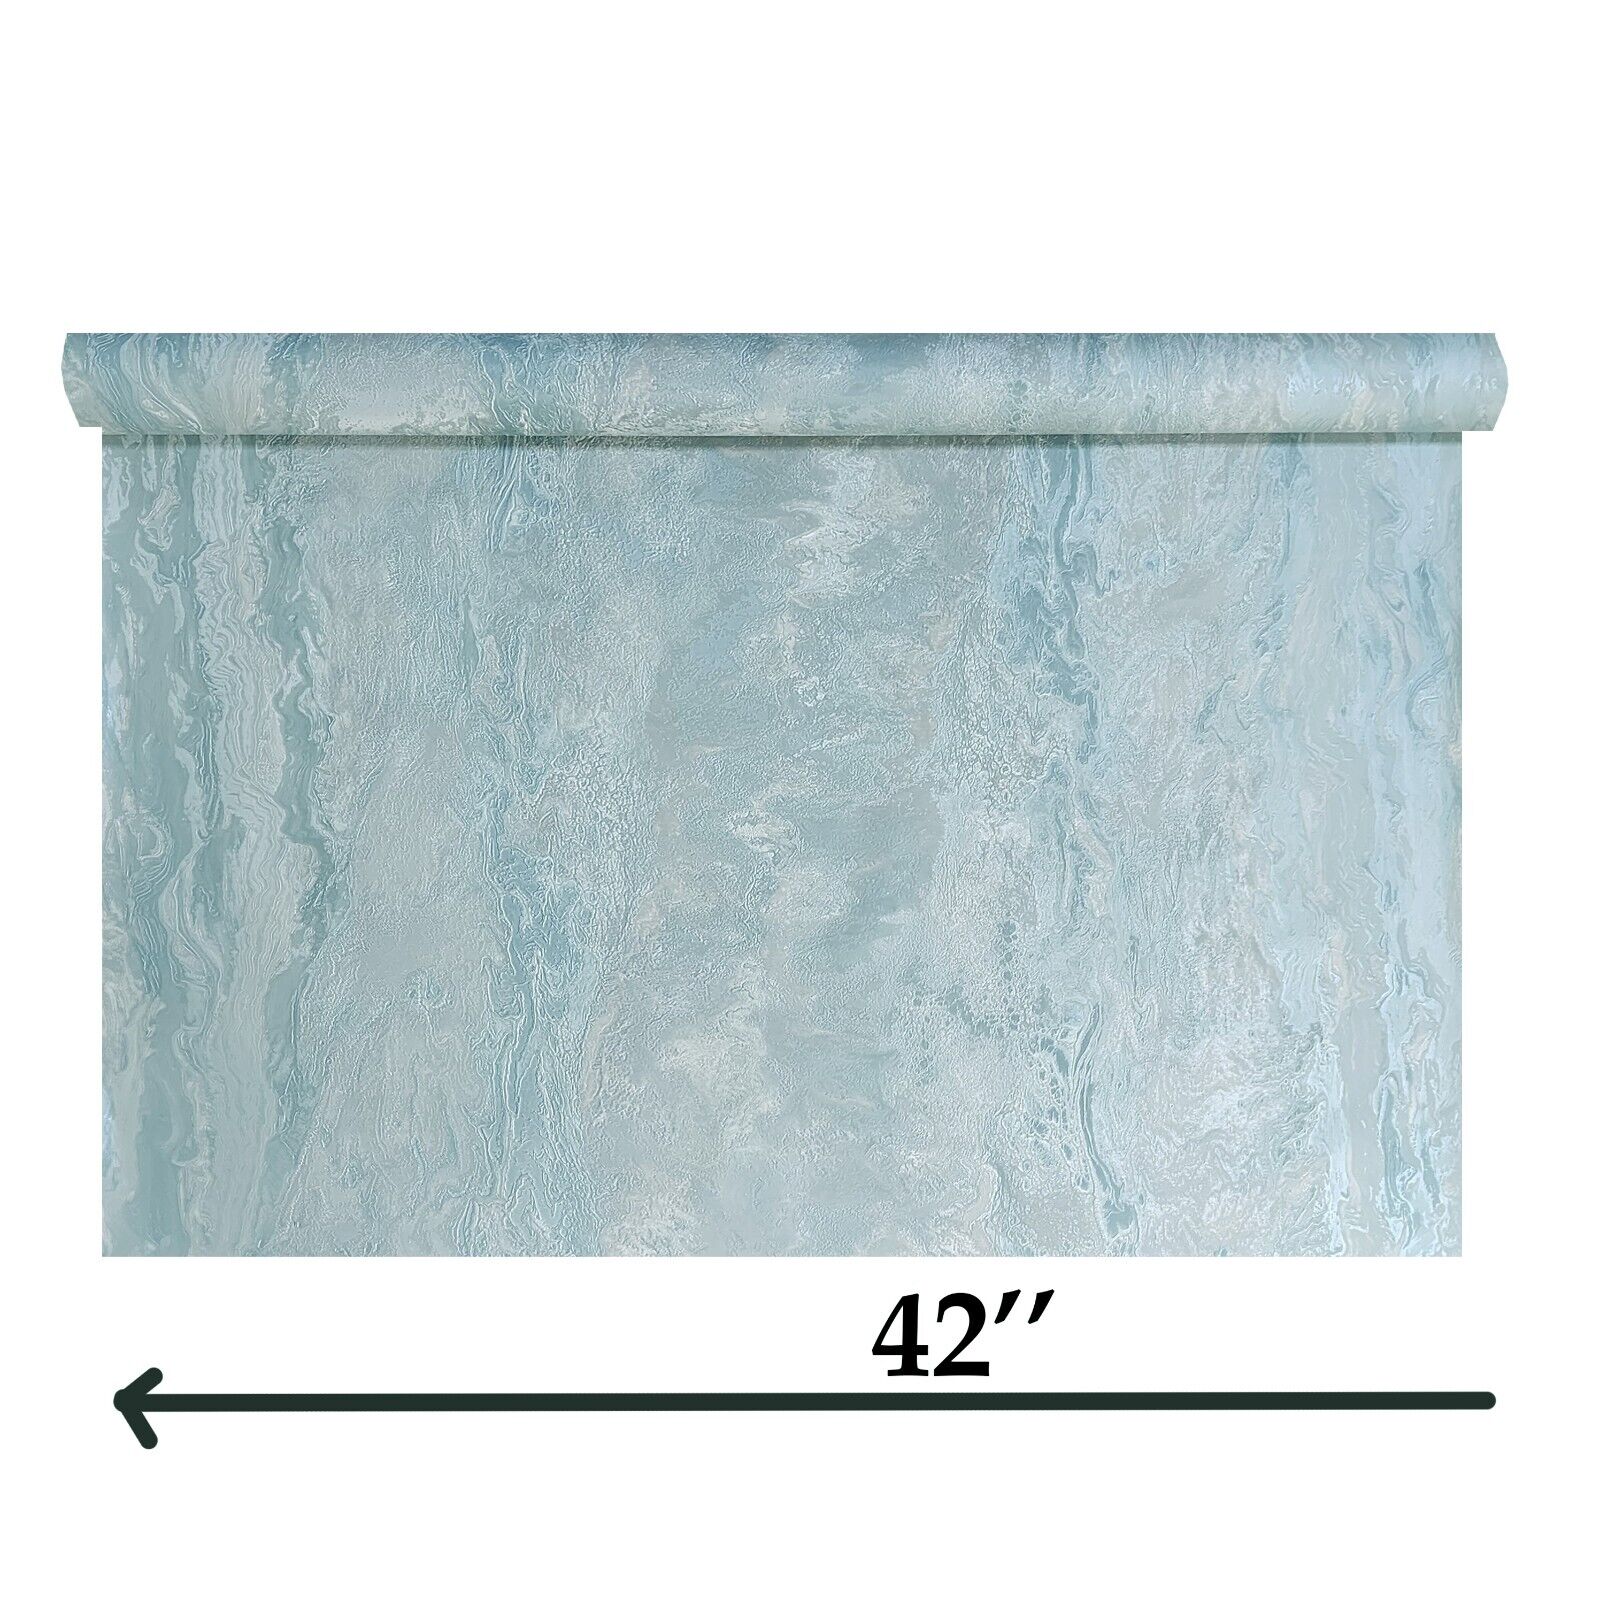 Z46008 Blue gray Tan Striped faux onyx marble stone textured 